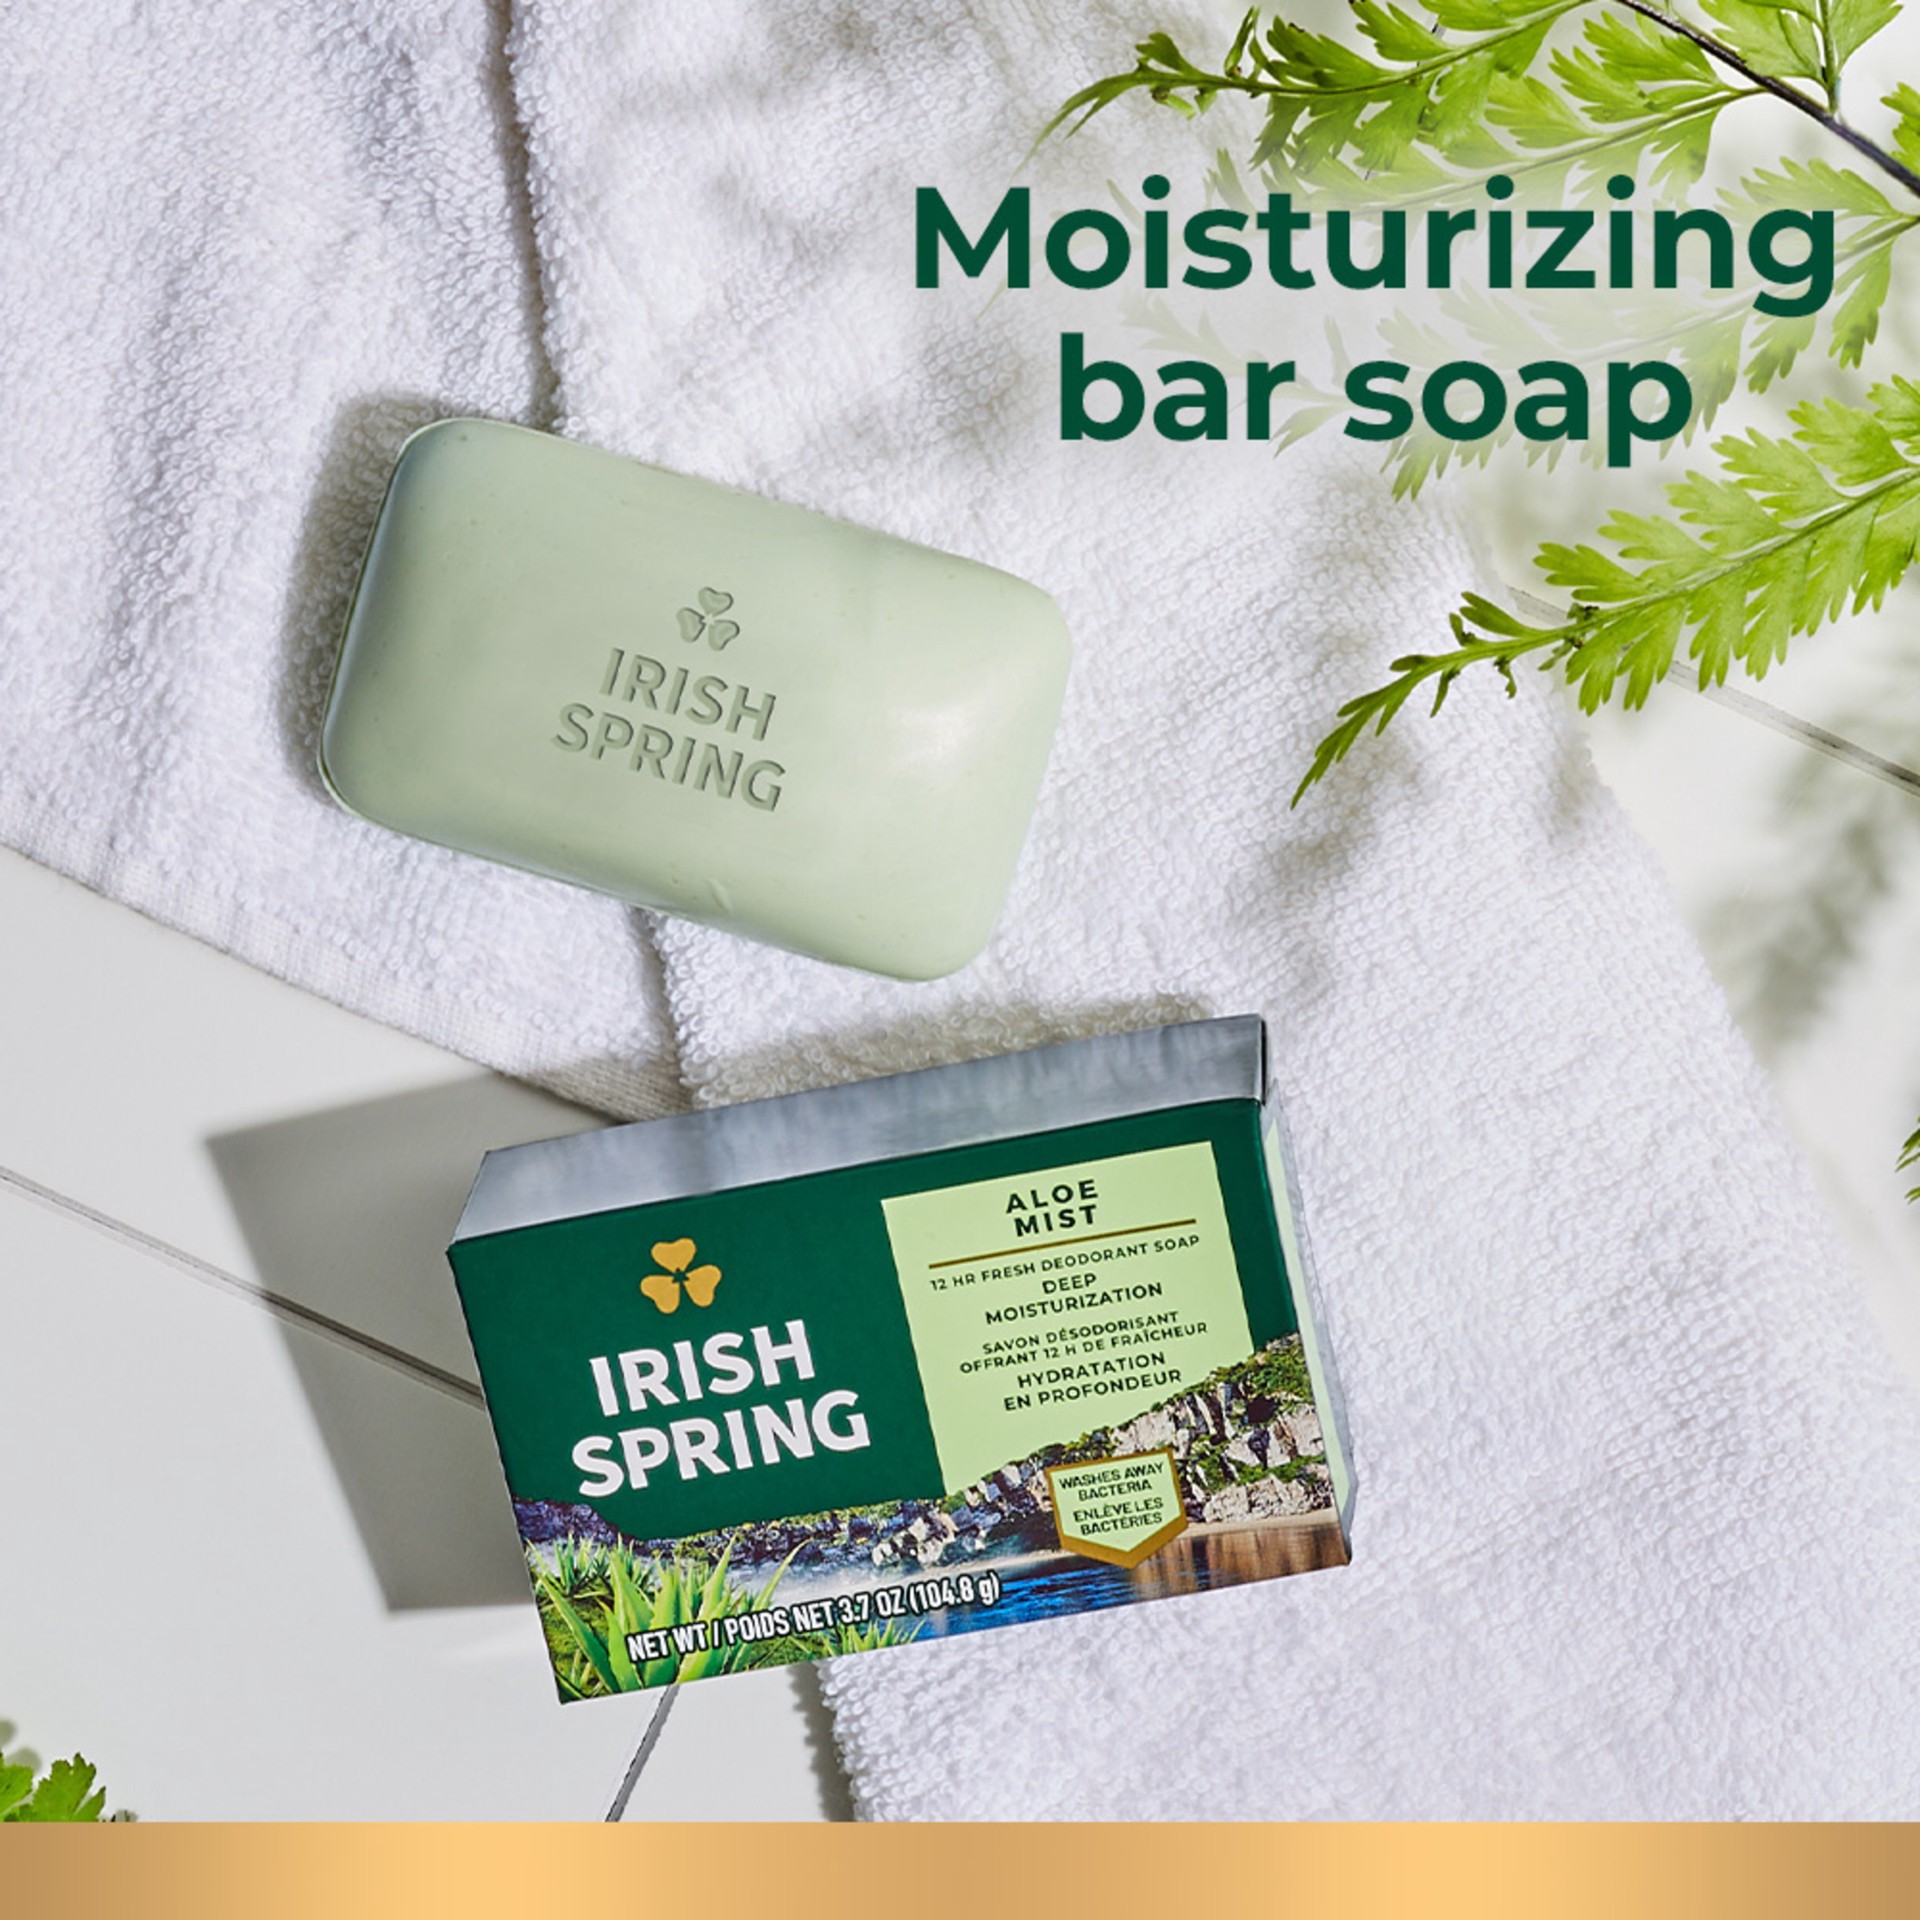 slide 10 of 10, Irish Spring Bar Soap for Men, Aloe Mist Deodorant Bar Soap, 3.7 Oz, 3 Pack, 11.1 oz